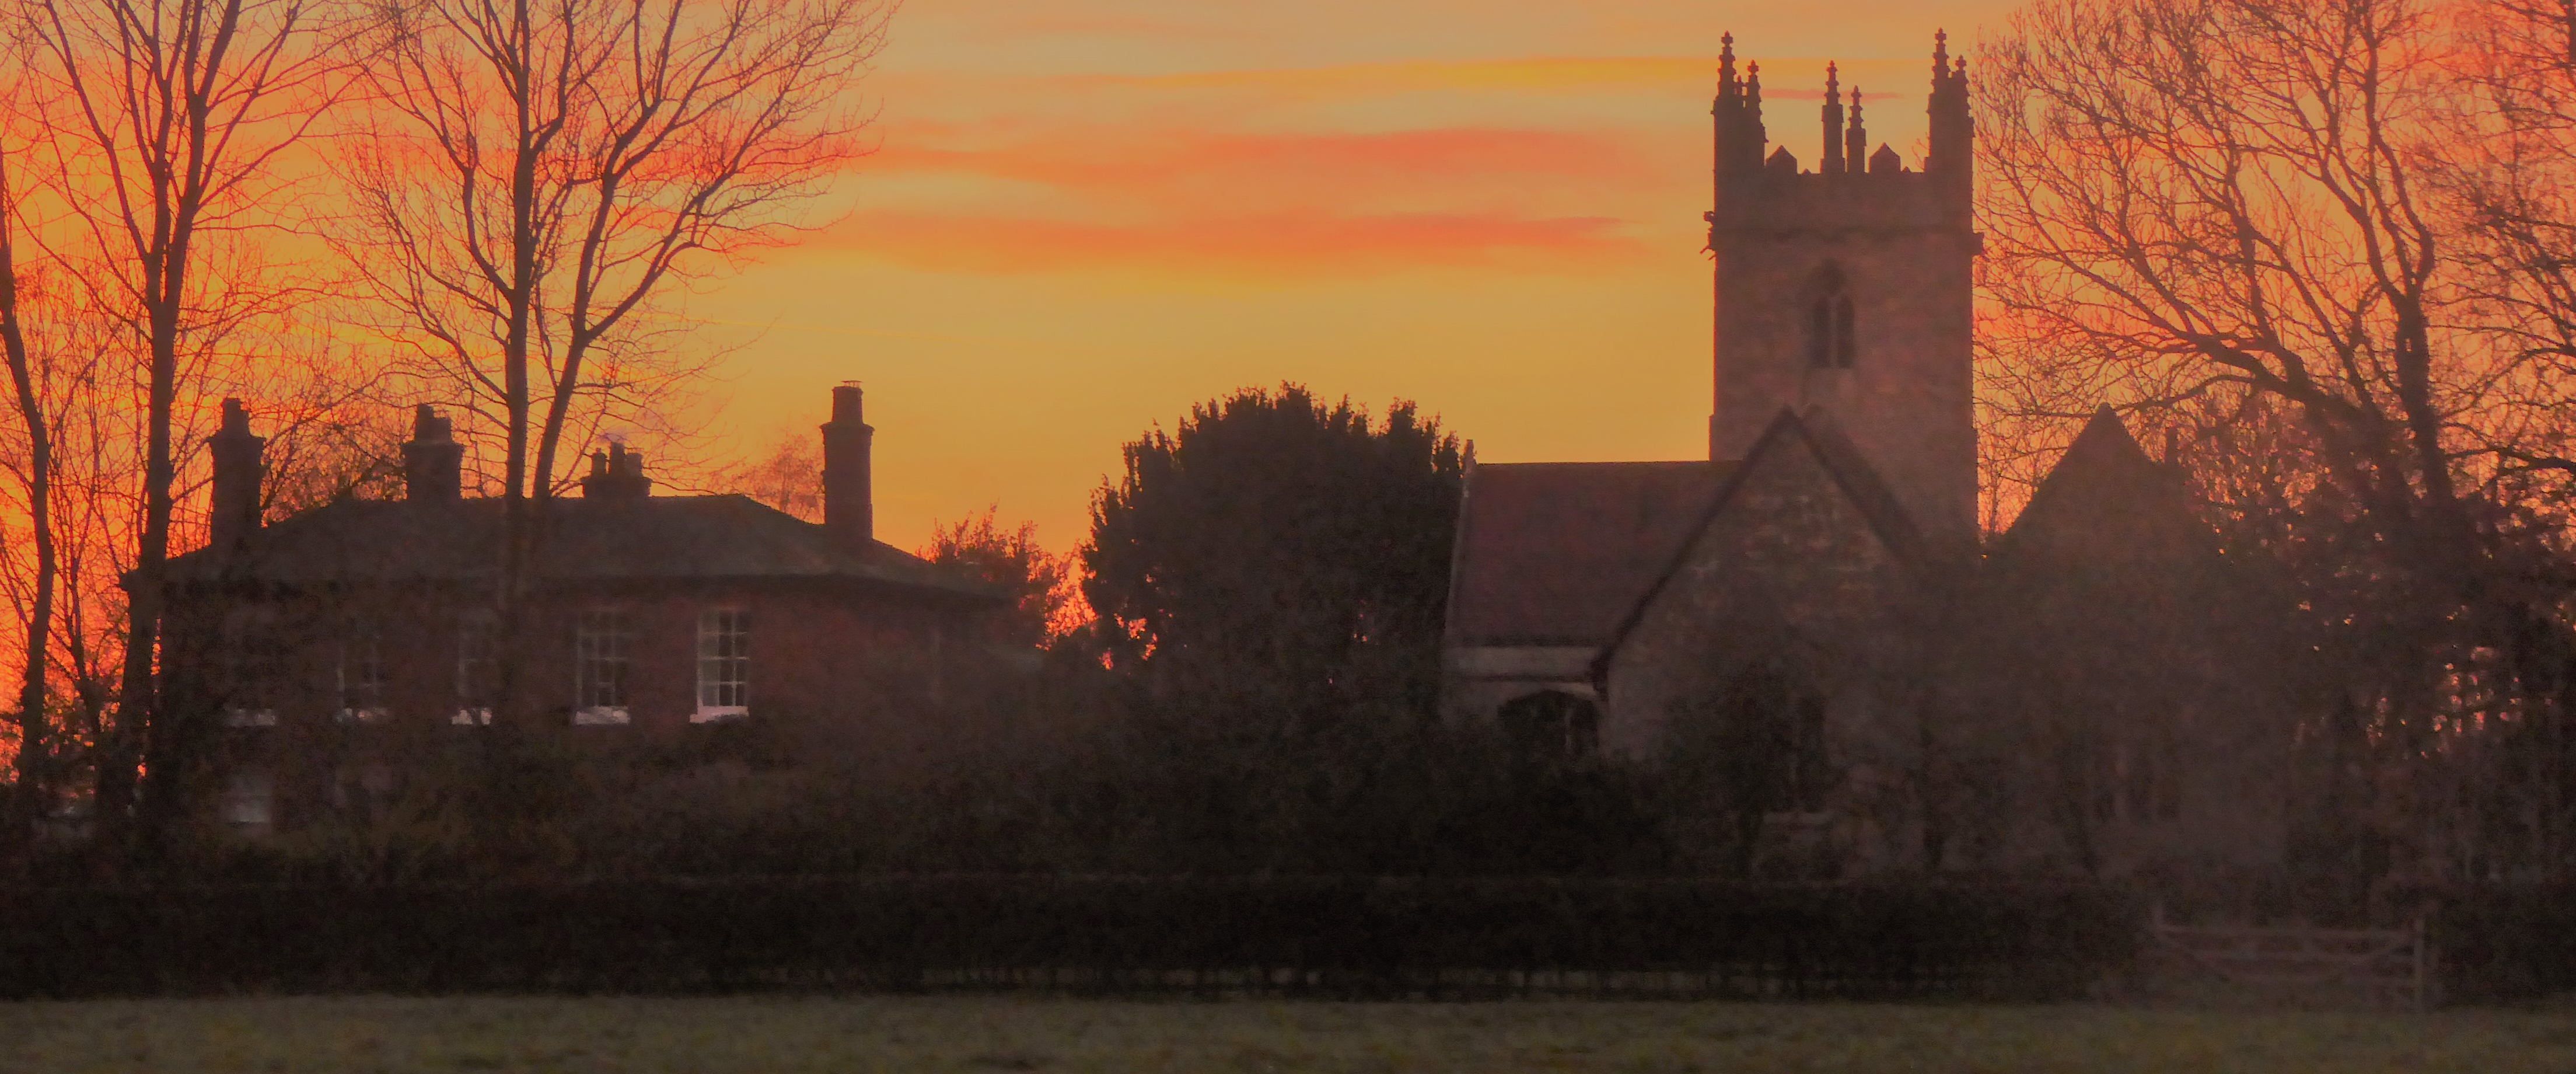 Photo of st peter's church norton disney at sunset